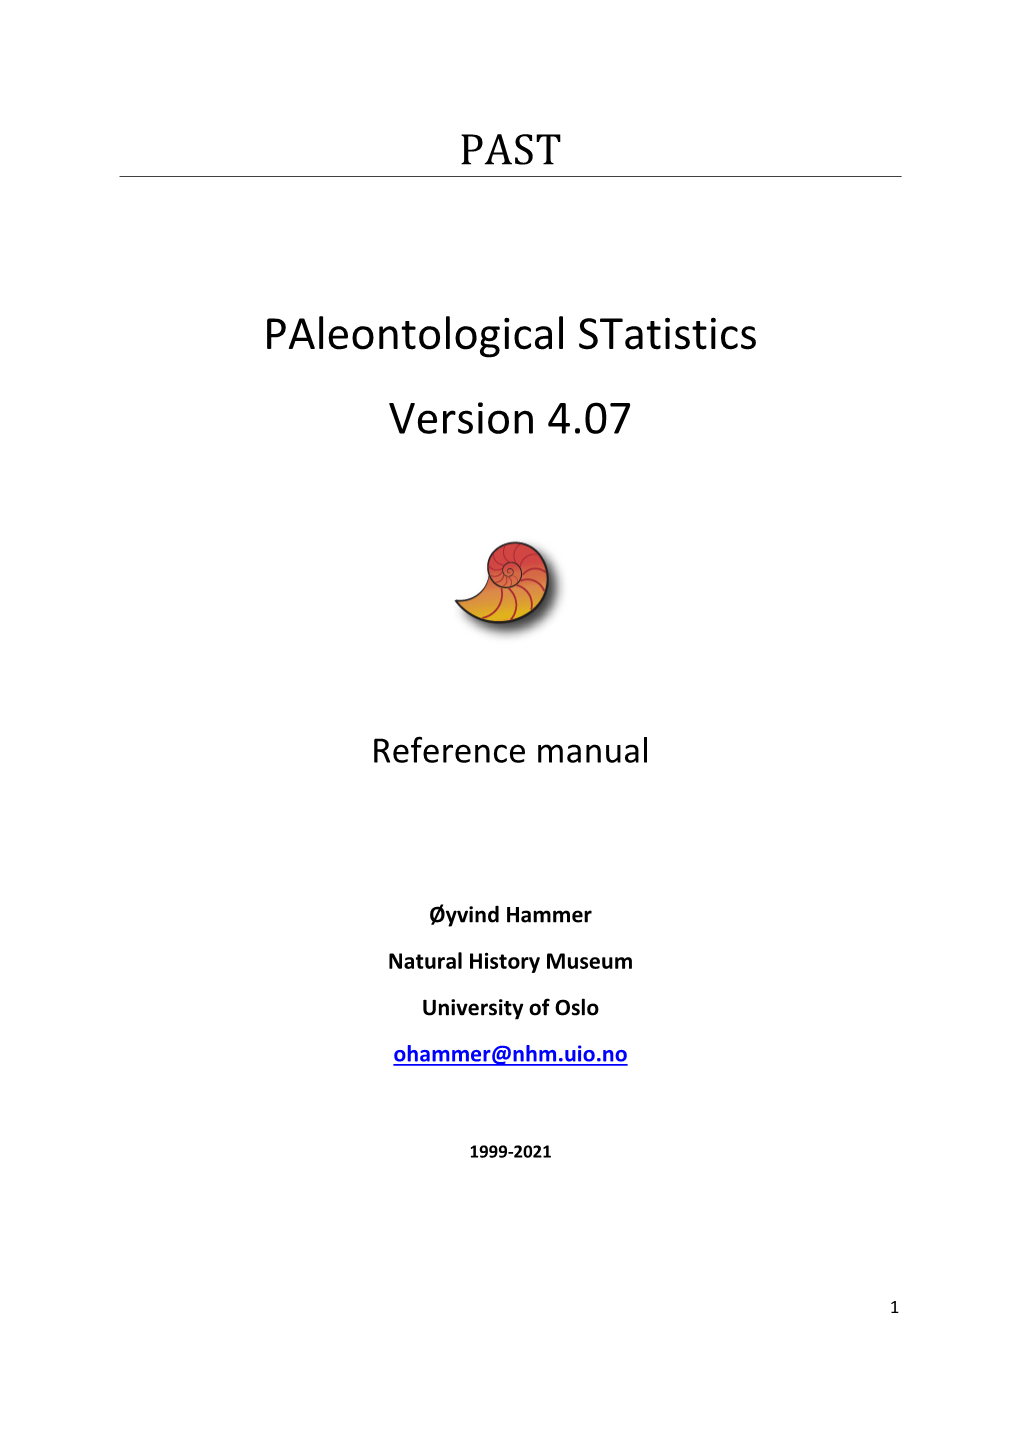 Reference Manual for PAST Paleontological Statistics